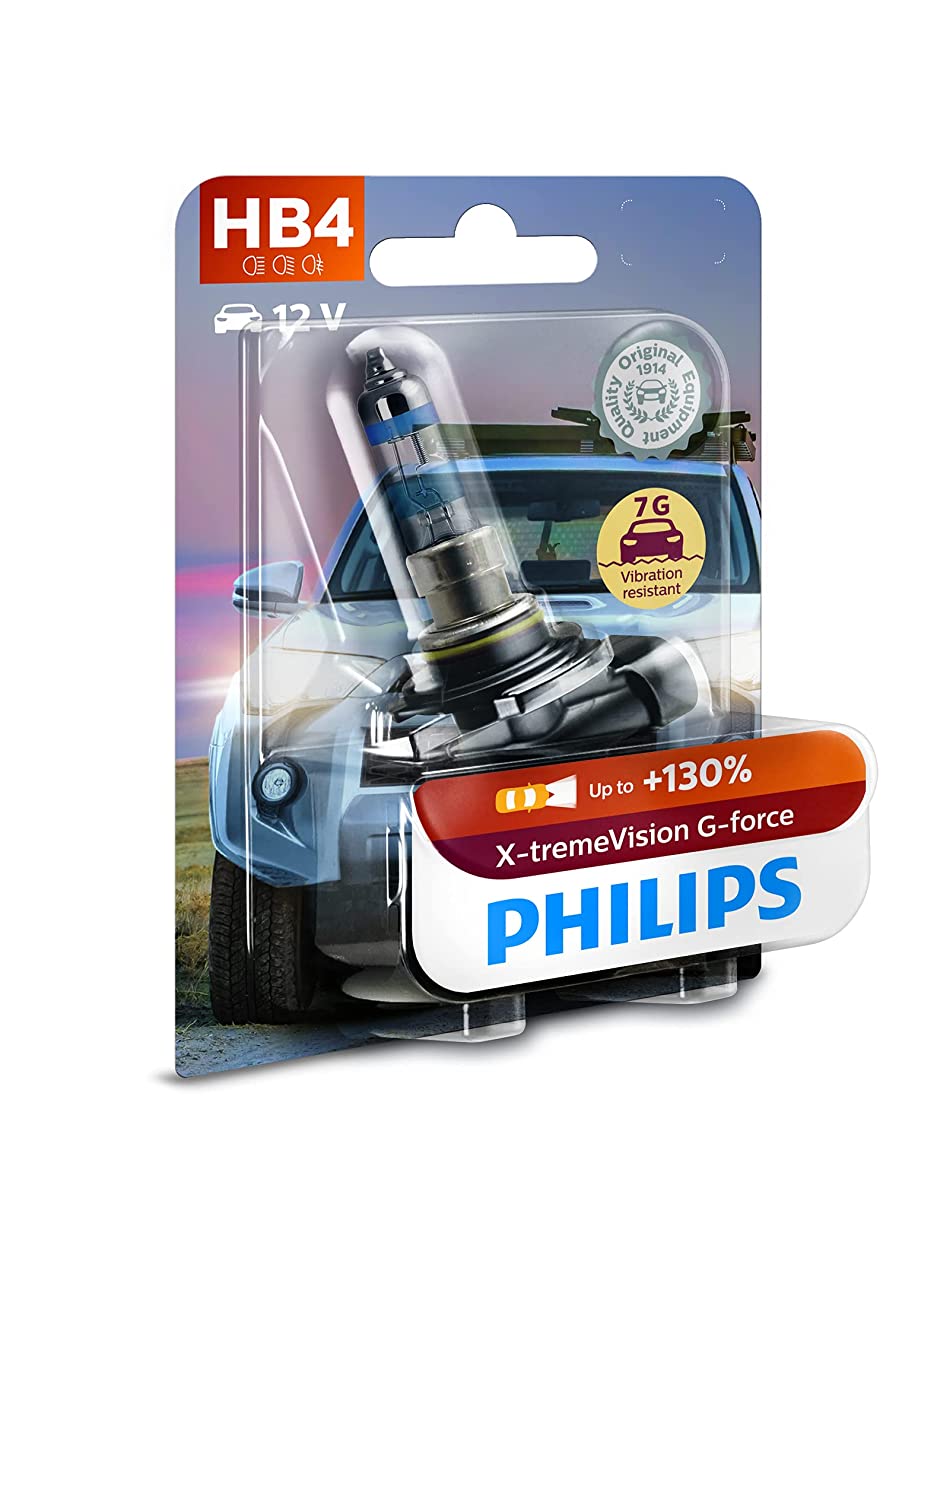 फिलिप्स एक्स ट्रीमविजन जी फोर्स कार हेडलाइट बल्ब 9006XVGB1